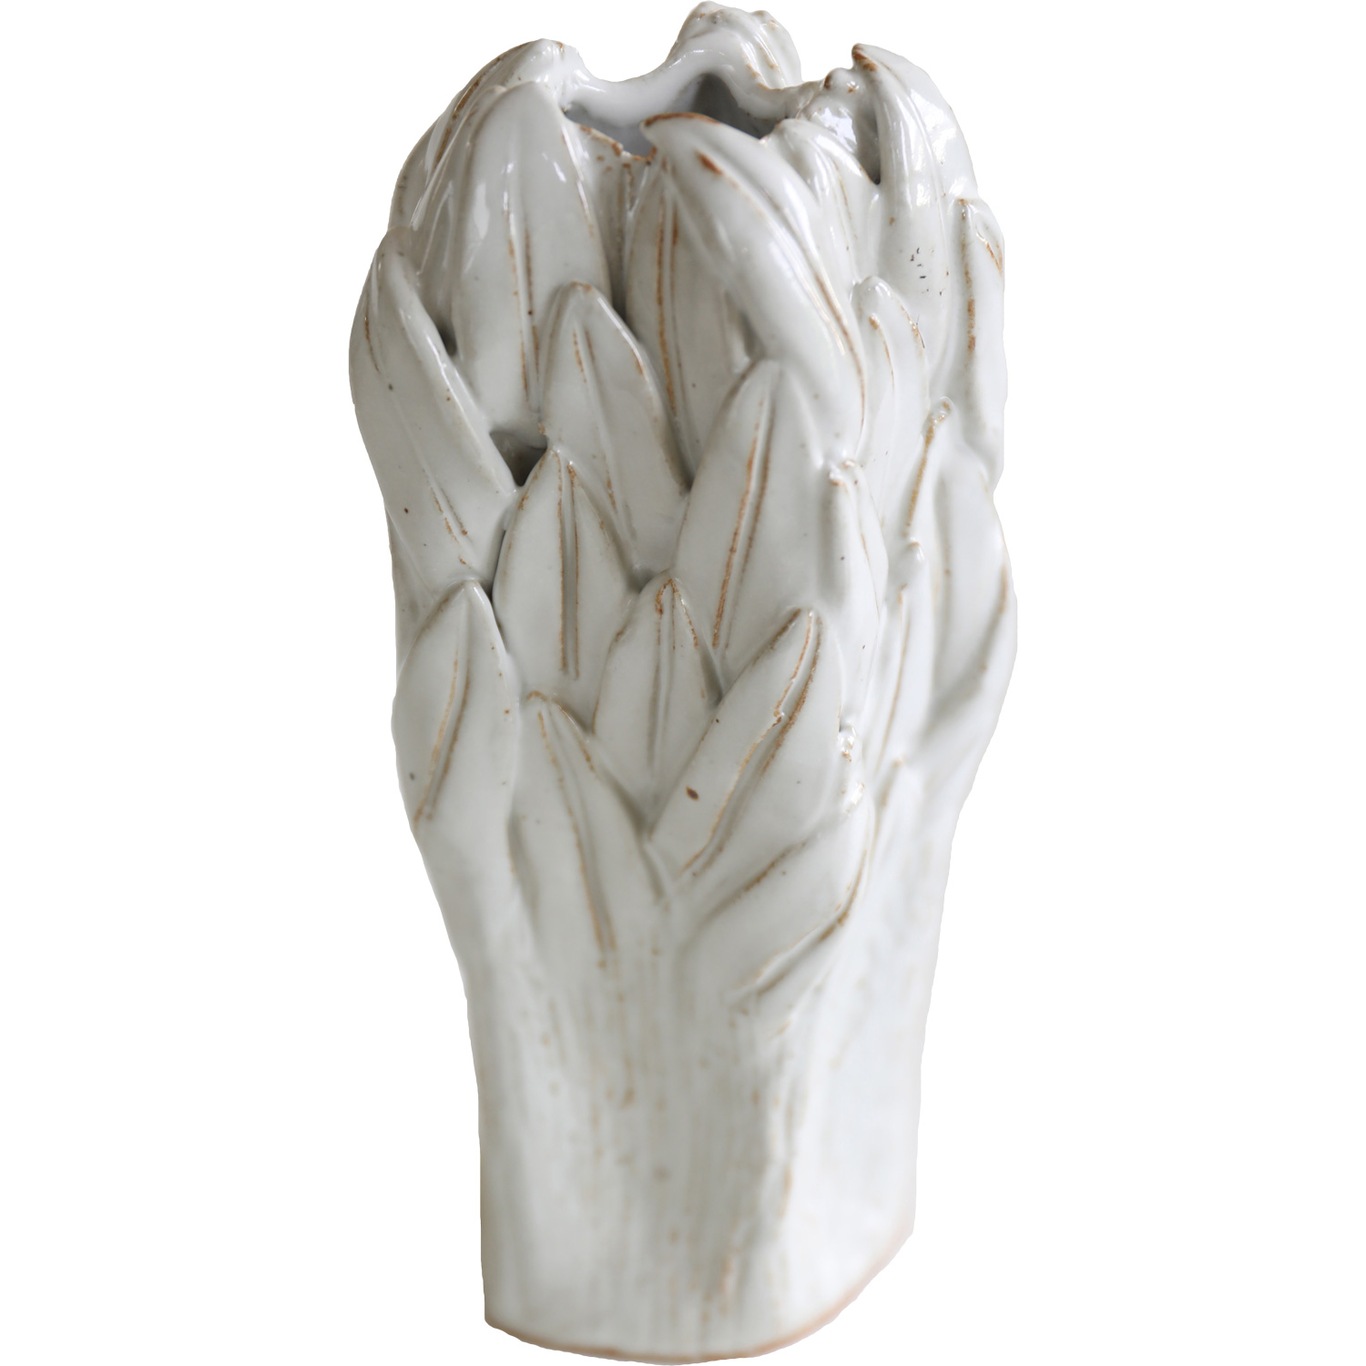 Vass Vase Handcrafted, White